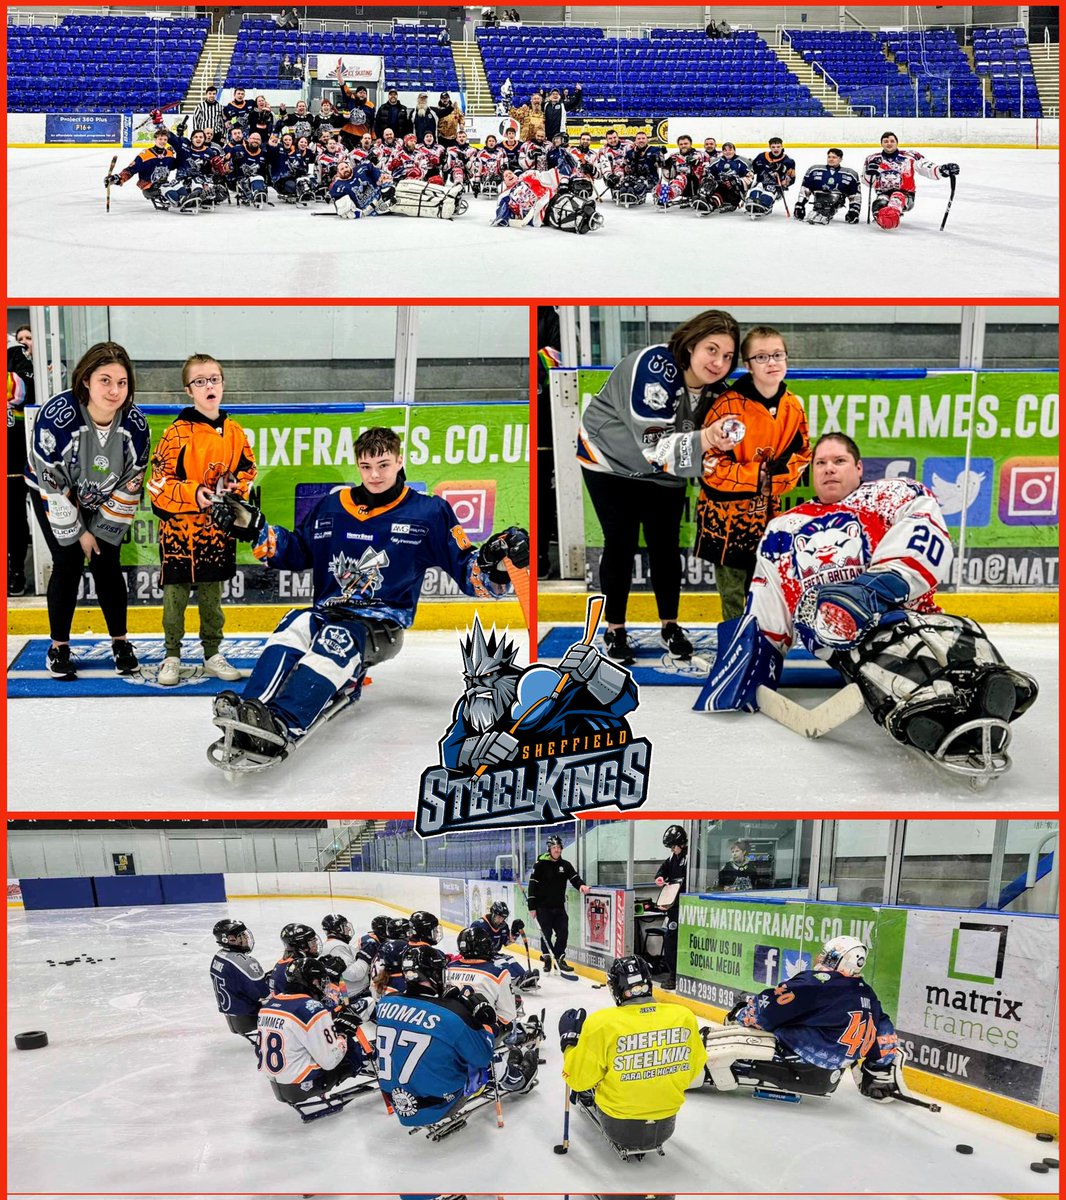 Fun session last night 😉 #HailToTheKings 👑 #SheffieldSteelkings #ParaIceHockey #GrowingTheGame #HockeyIsForEveryone #SledgeHockey #SledHockey #IceHockey #HockeyFamily #Sheffield #Pride #NHL #EIHL #EIH #NIHL